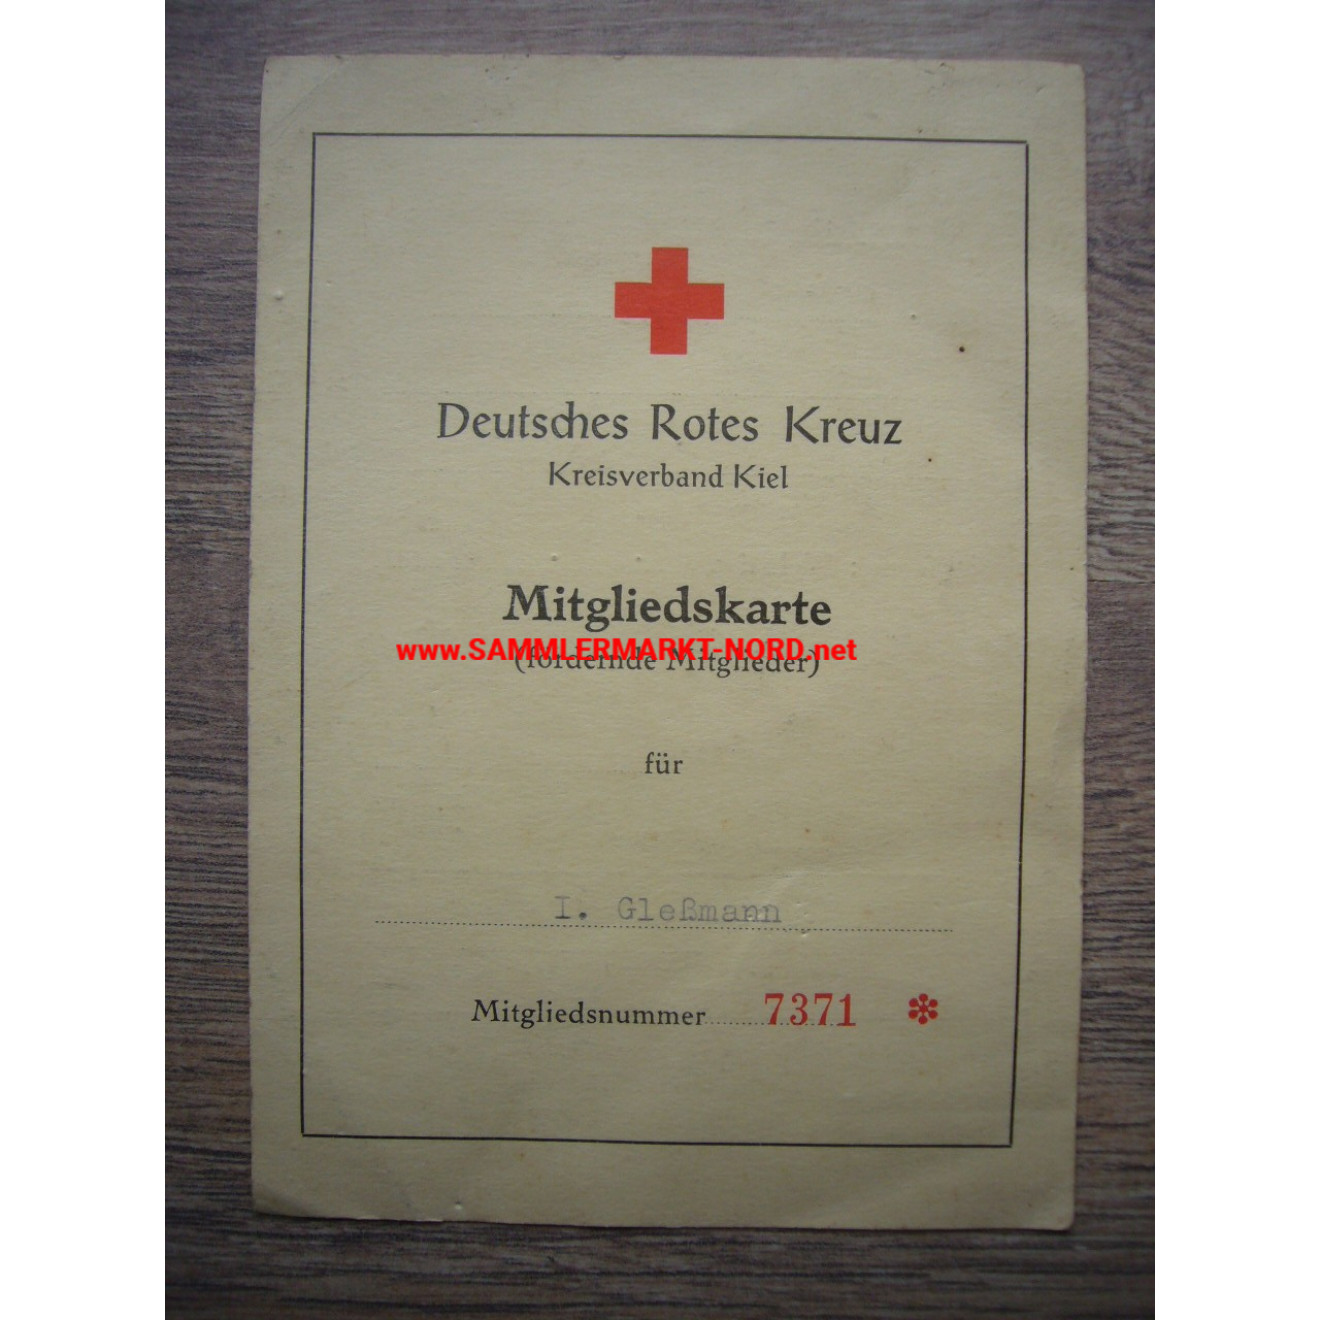 DRK Rotes Kreuz Kiel - Mitgliedskarte für fördernde Mitglieder